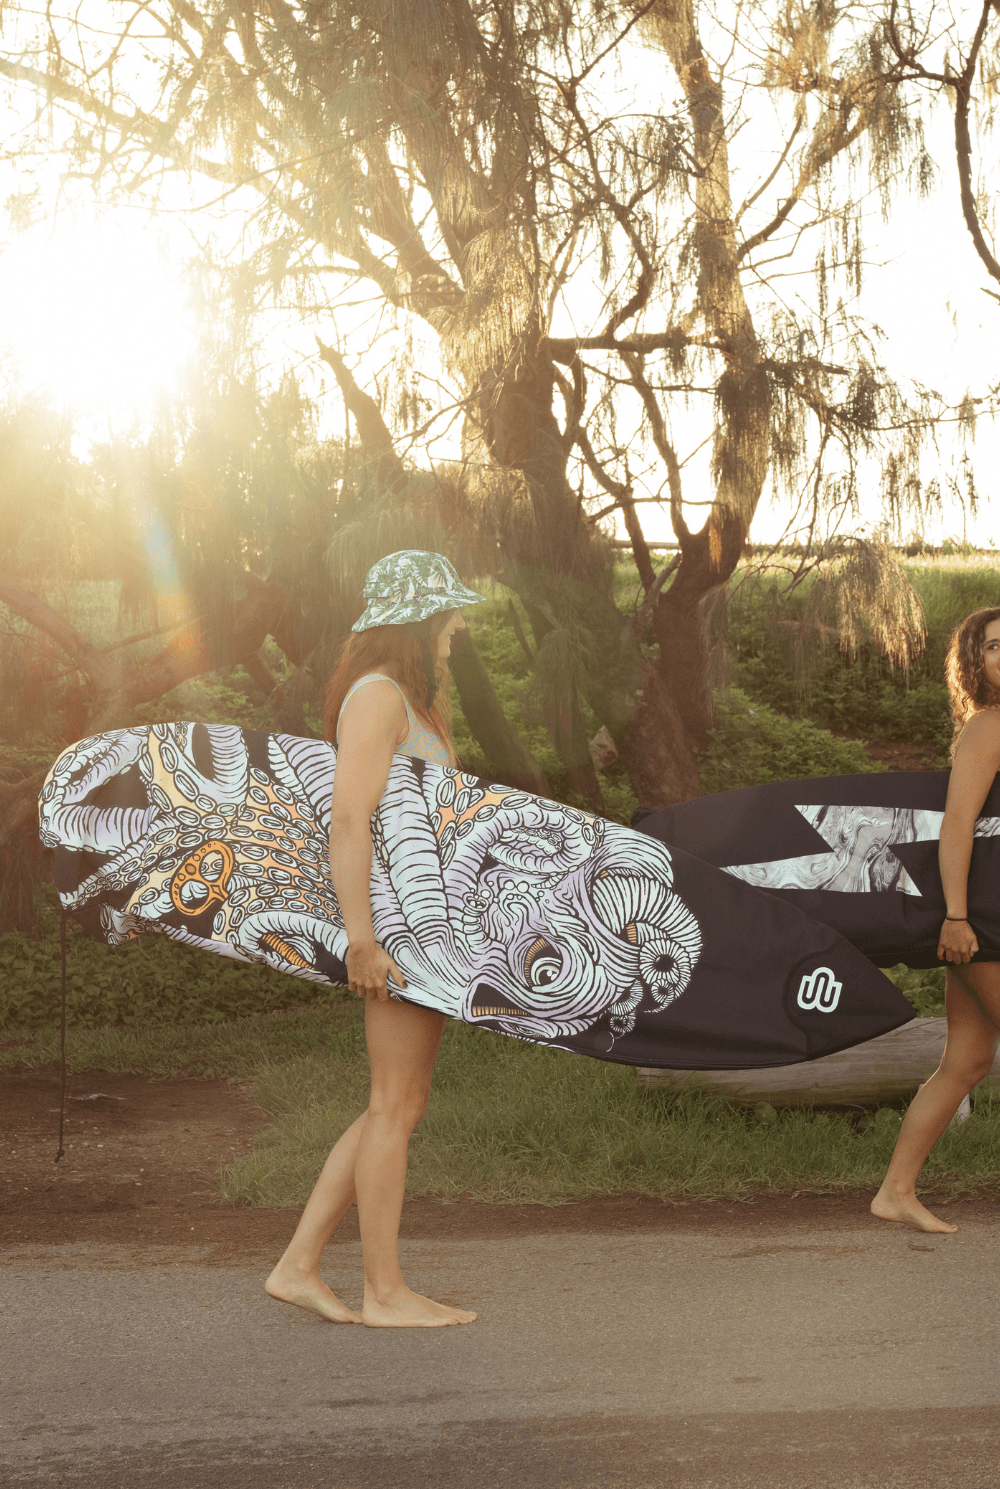 Kraken  Fun/Fish Surfboard Cover